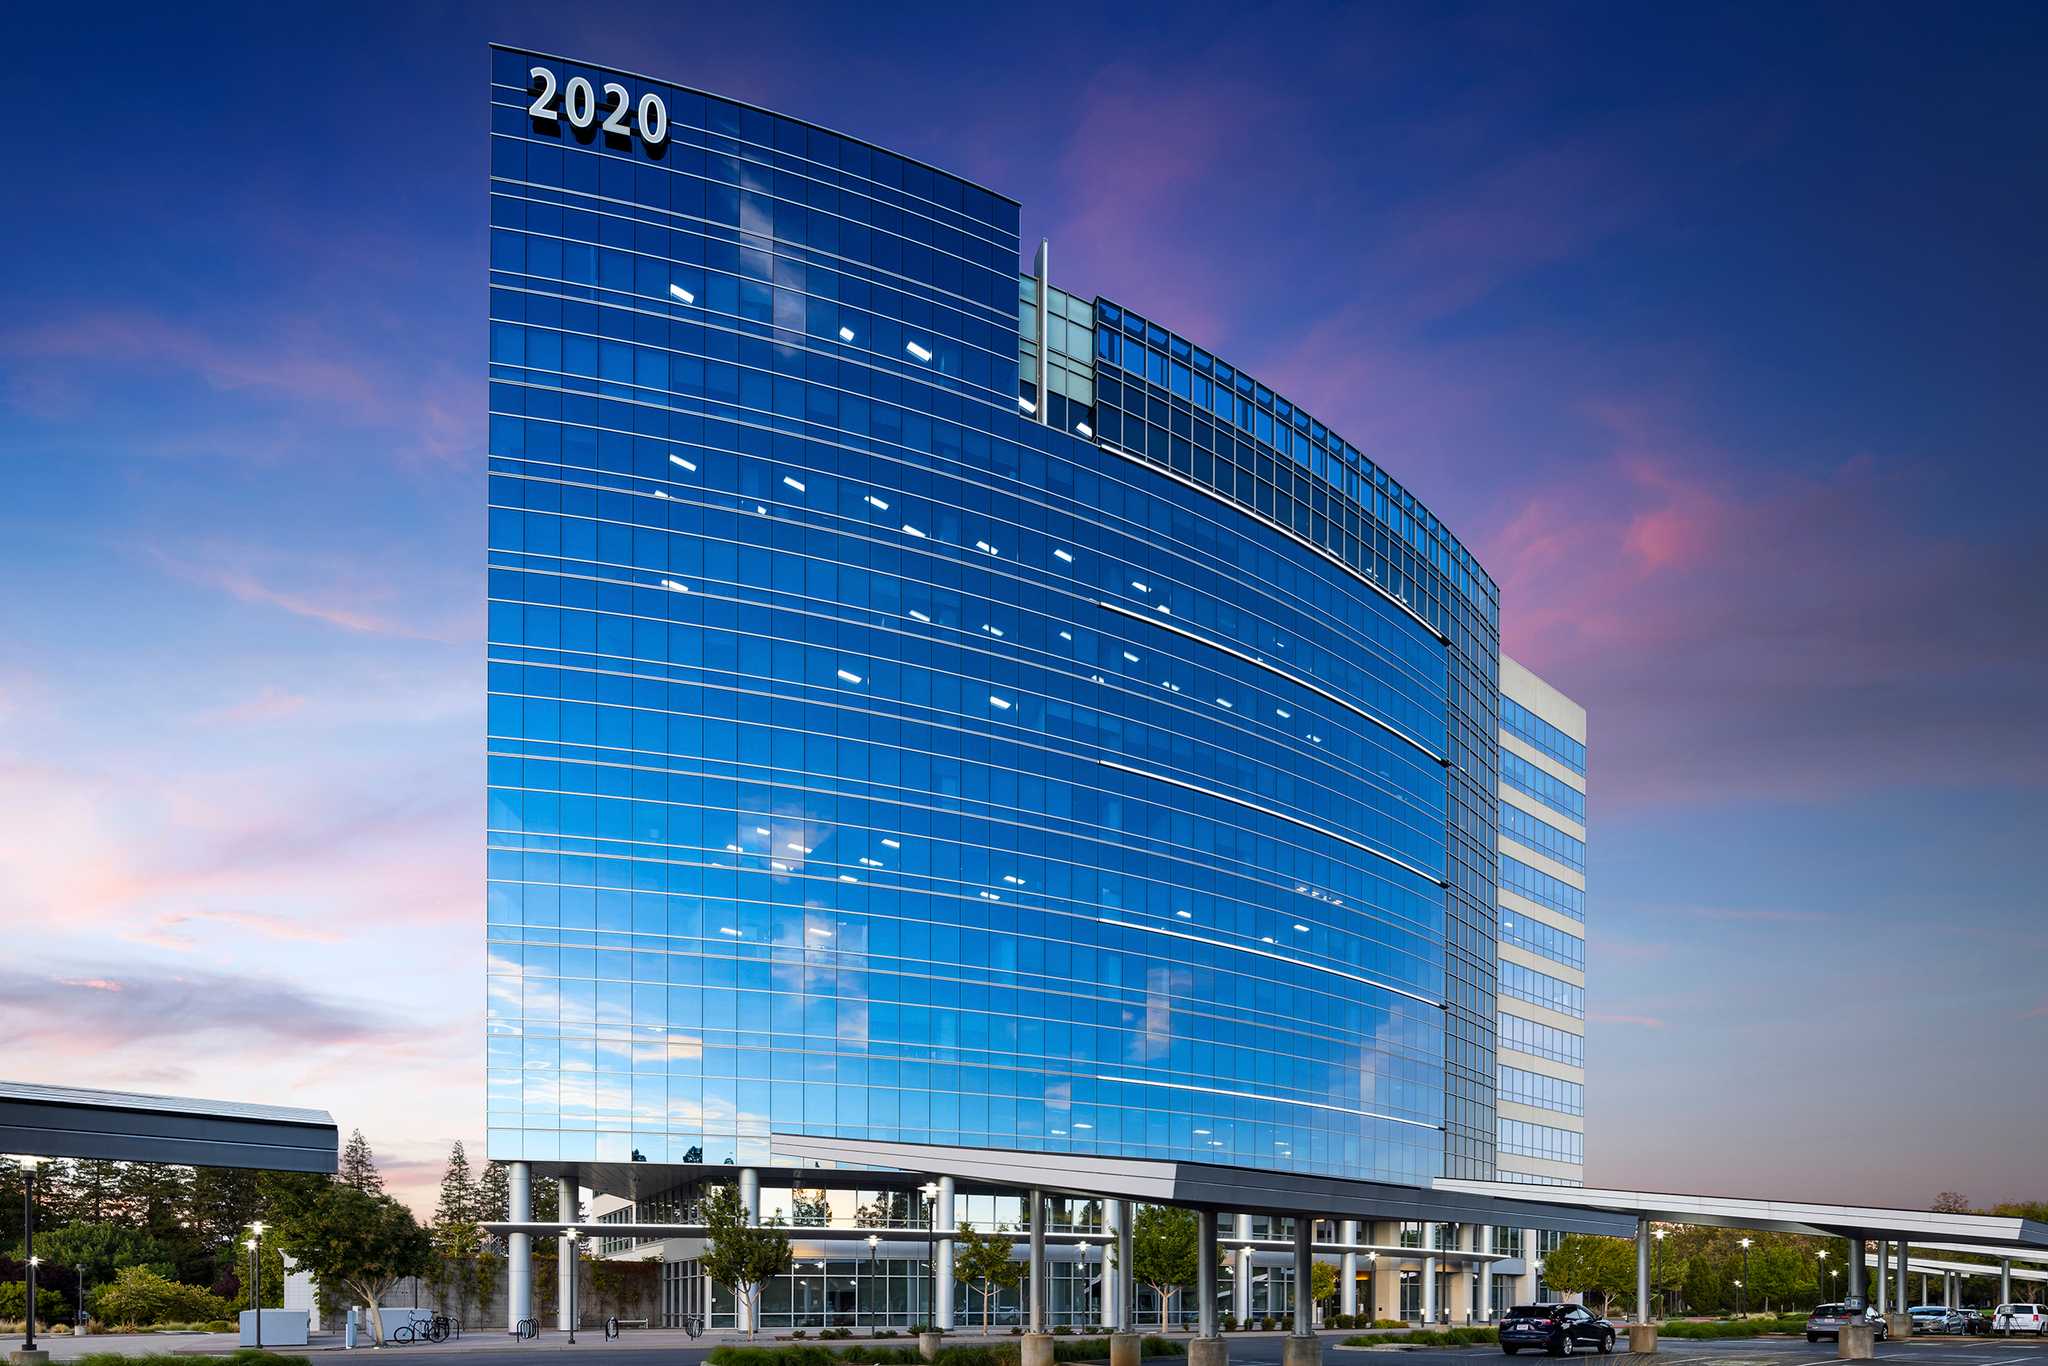 Avison Young announces $44.5 million sale of Natomas Corporate Center,
a Class A Office Property in Sacramento